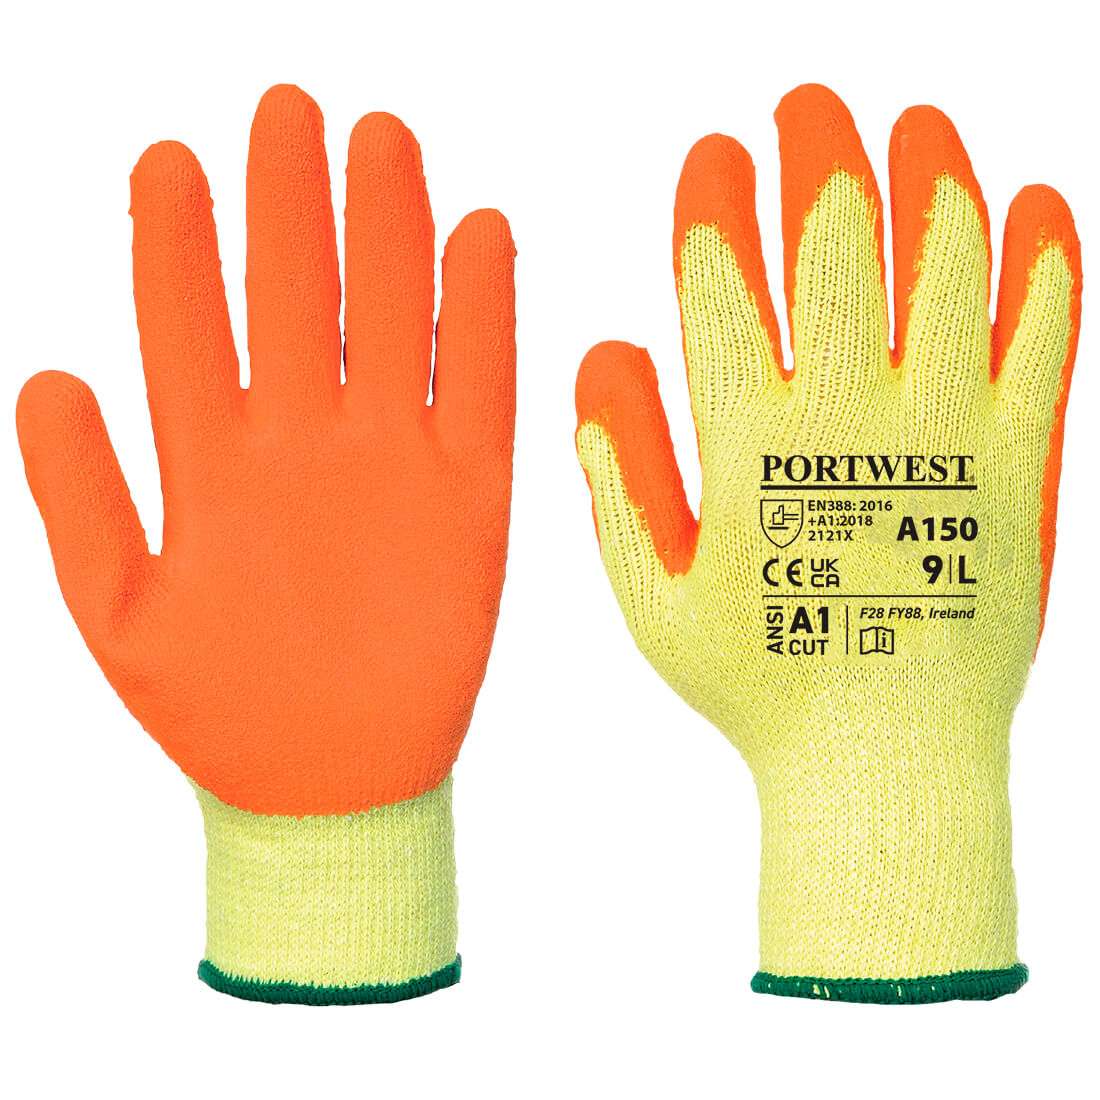 General Handler Glove Latex Coated (Orange) Size XL - 12 Pack